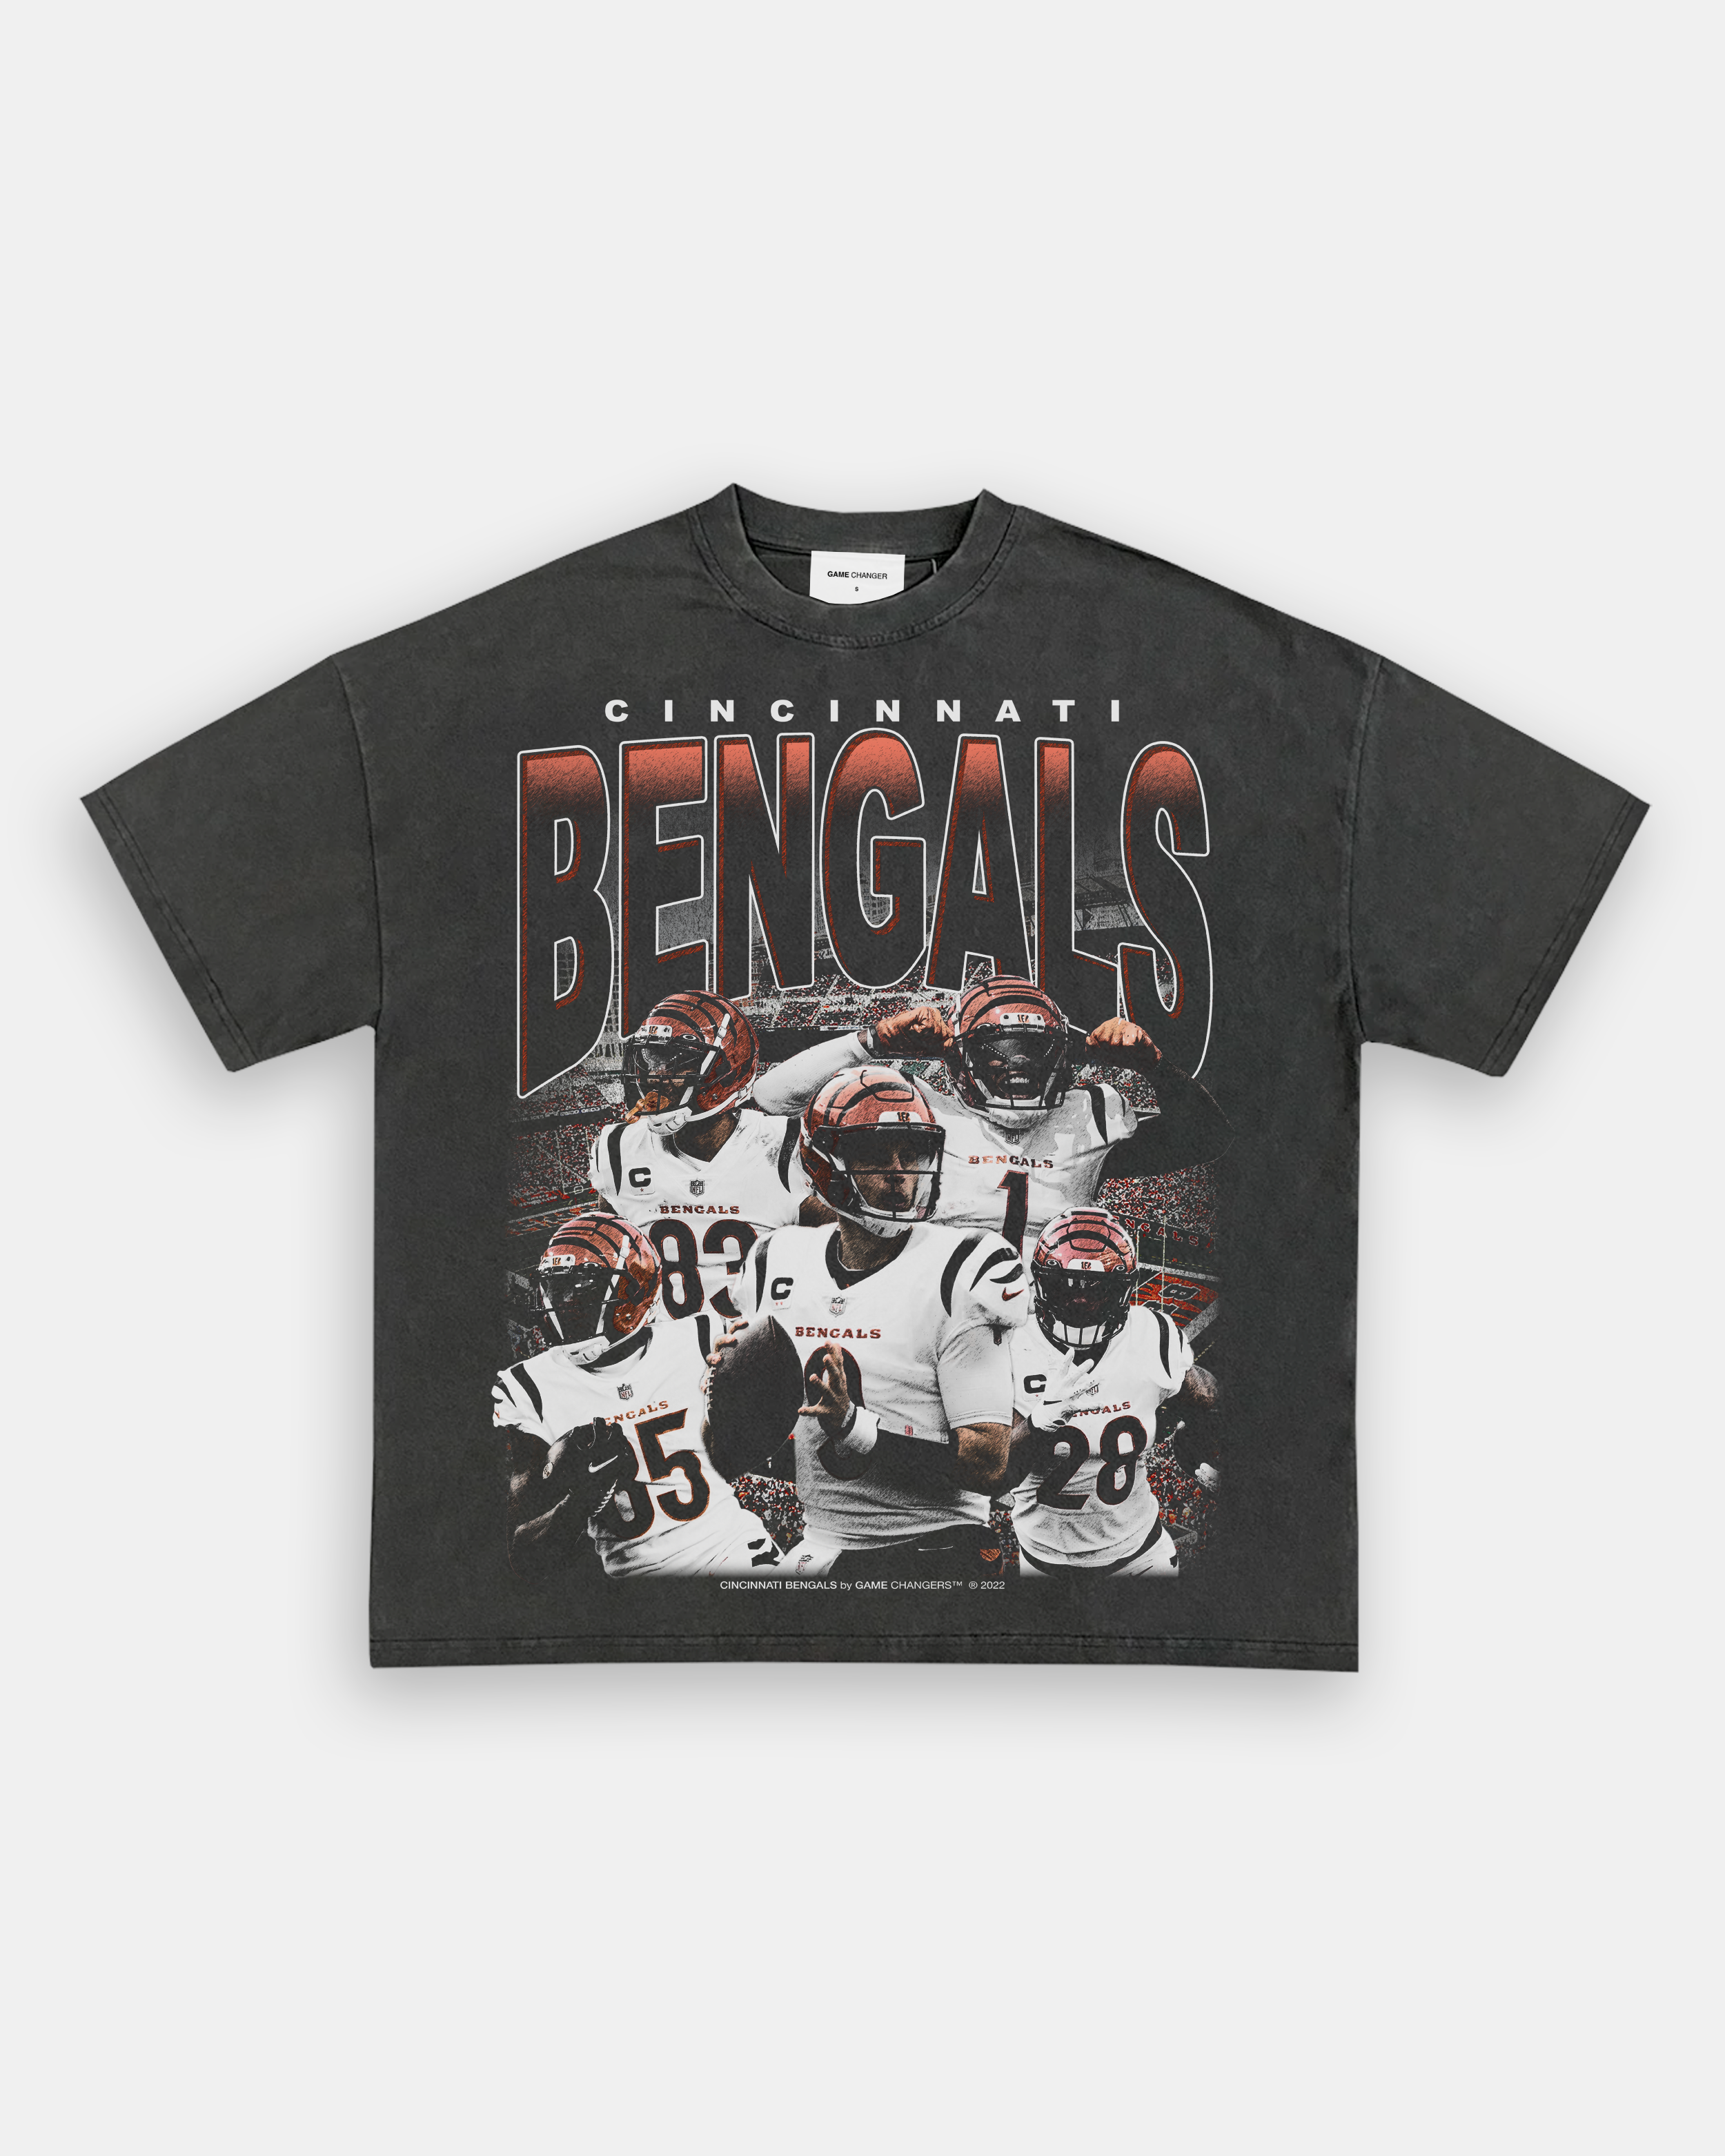 Cincinnati Bengals Retro Vintage Art Kids T-Shirt